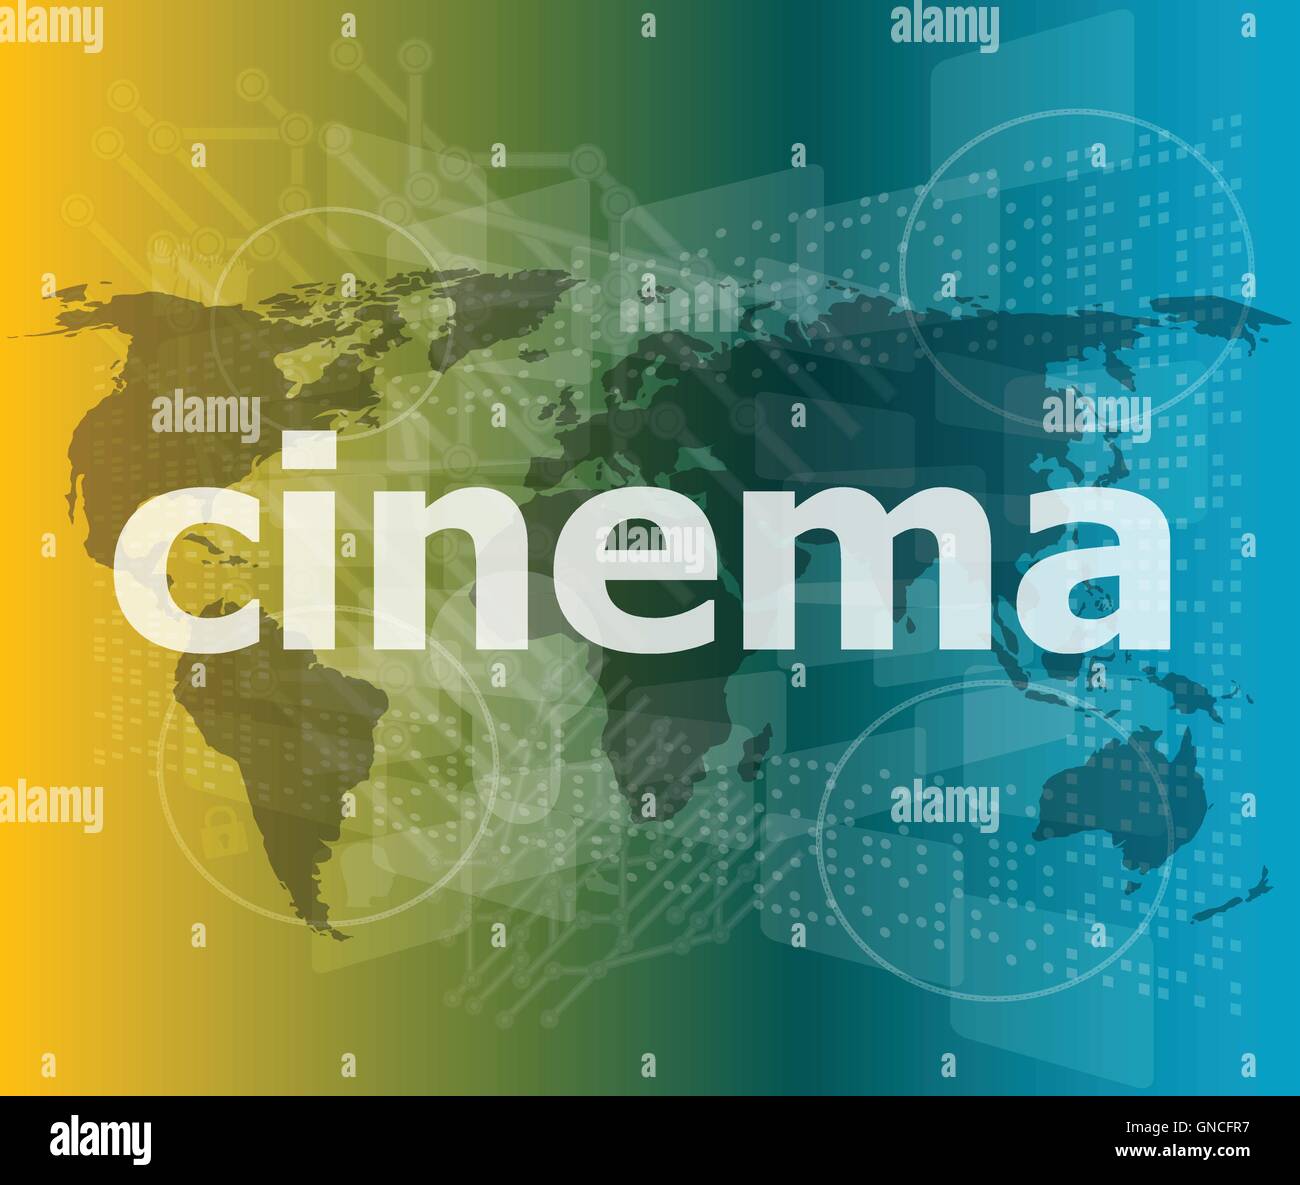 Kino-Wort auf dem digitalen Bildschirm mit Welt-Karte-Vektor-illustration Stock Vektor